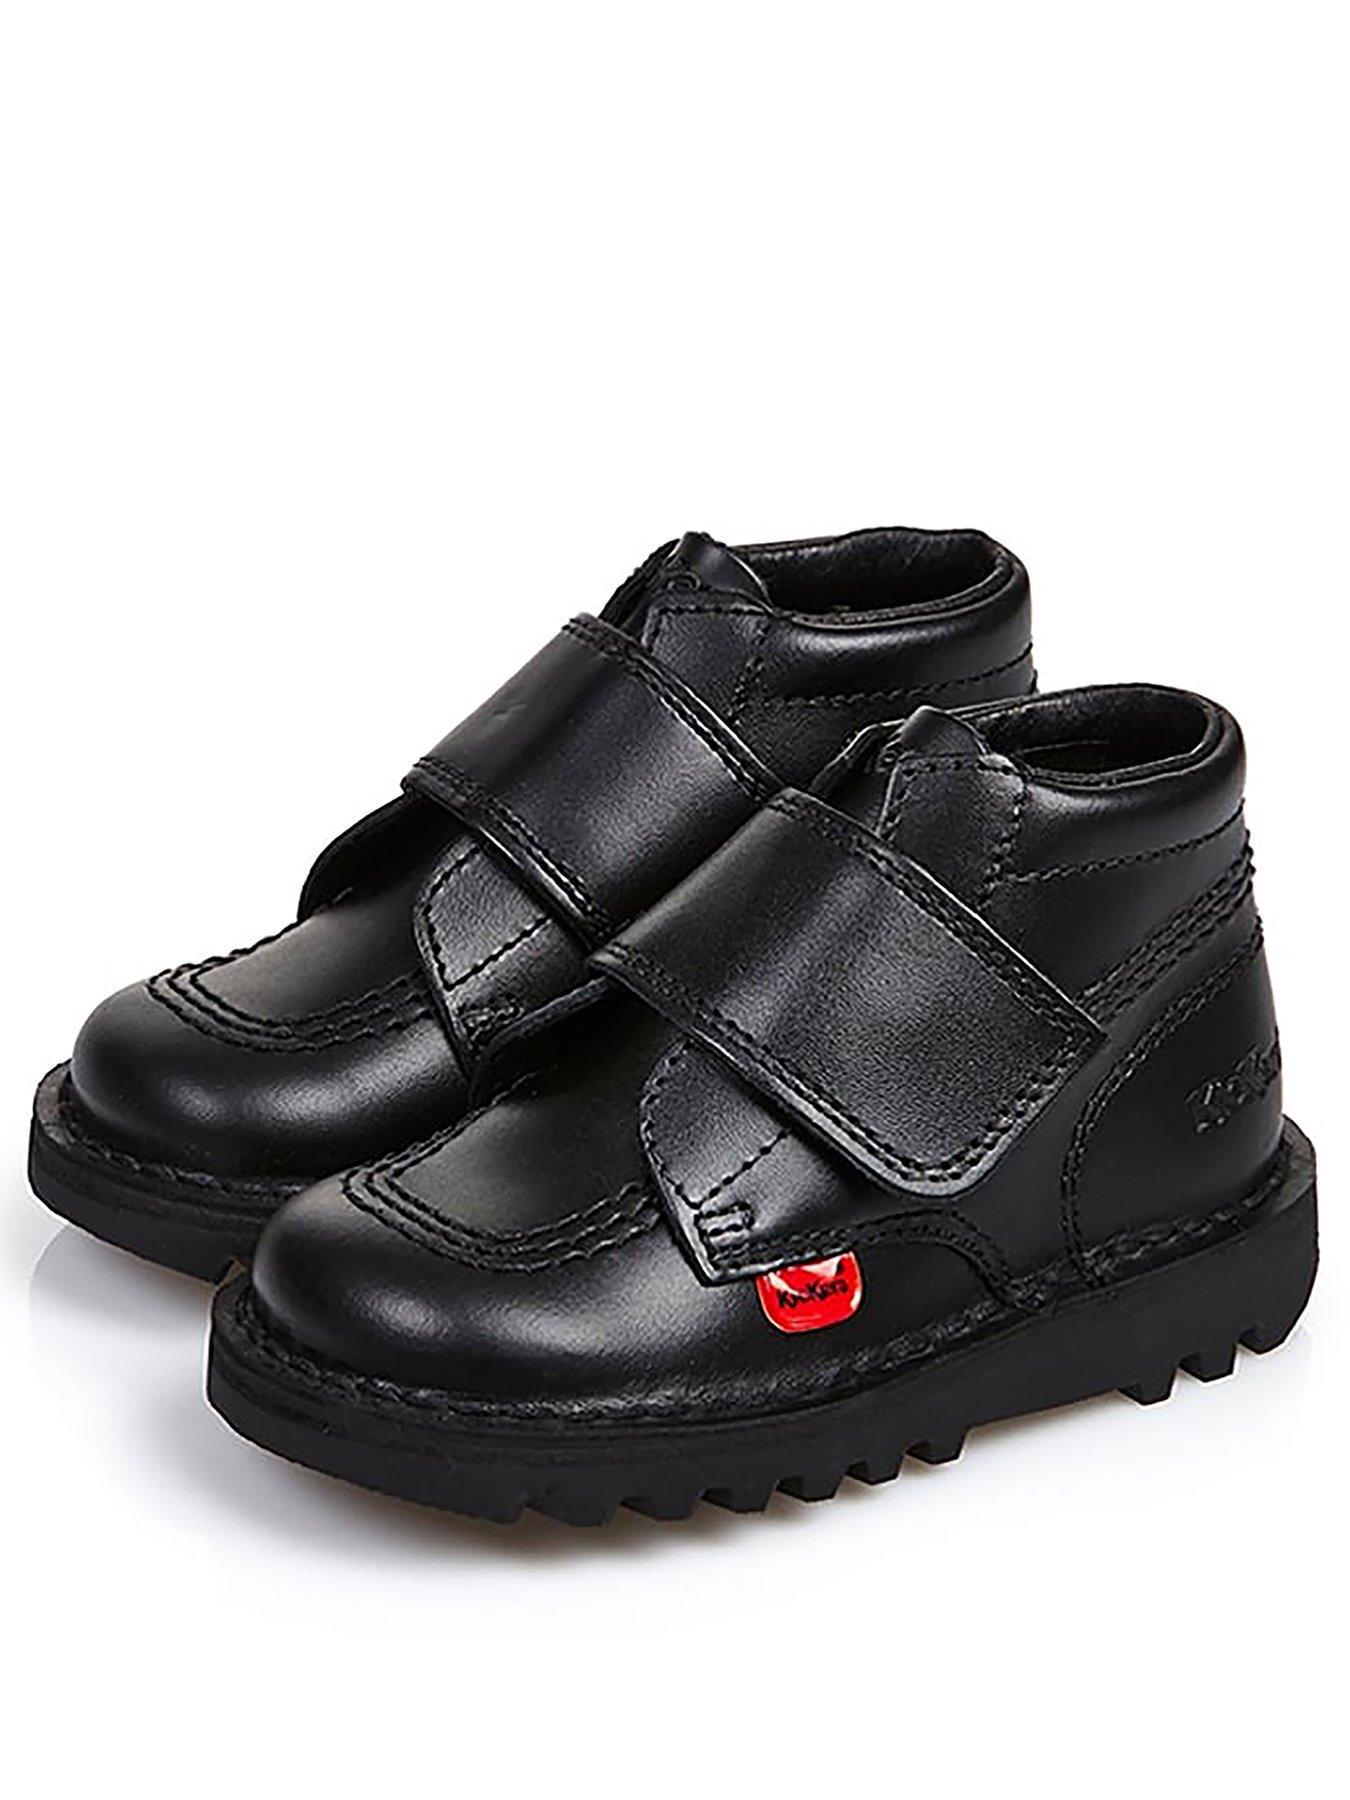  Toddler Kilo Strap Boots - Black